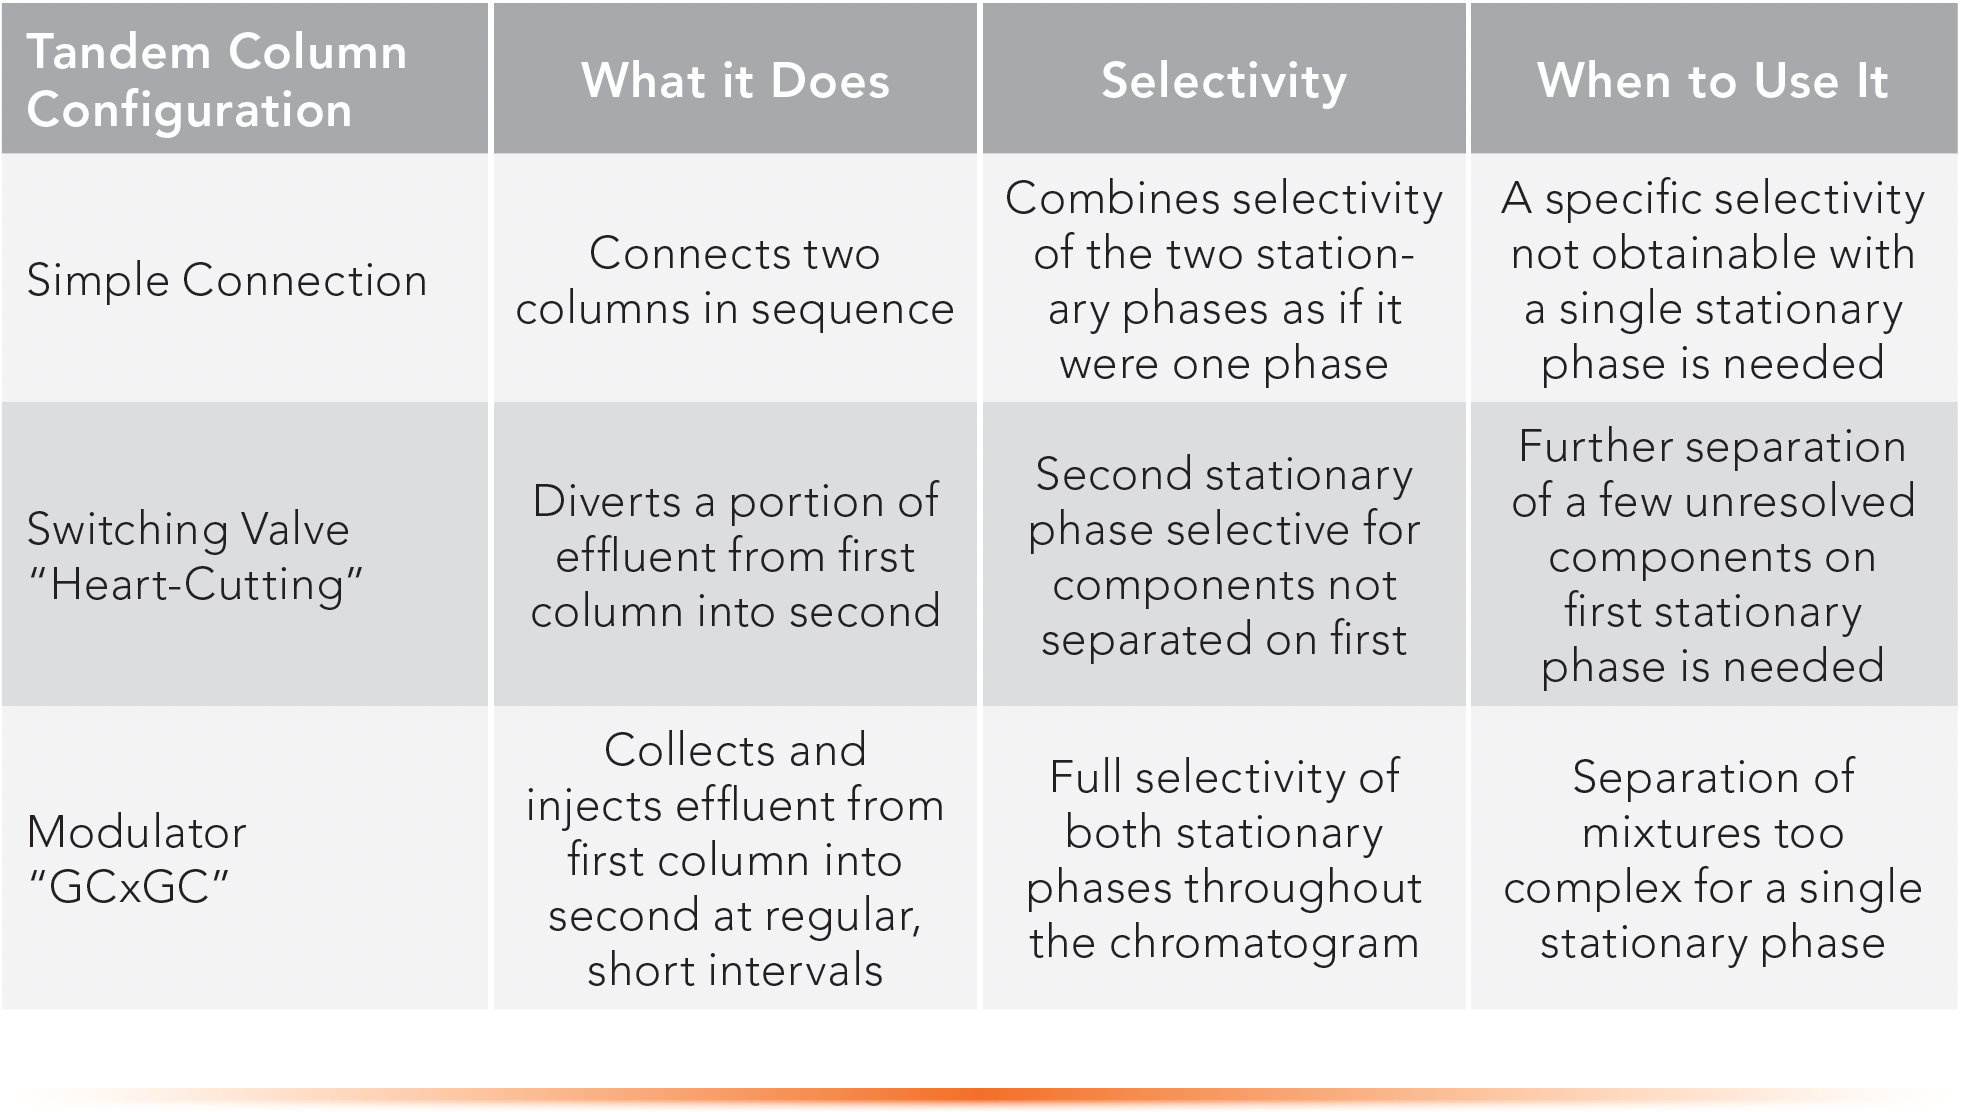 TABLE I: Summary of tandem column configurations